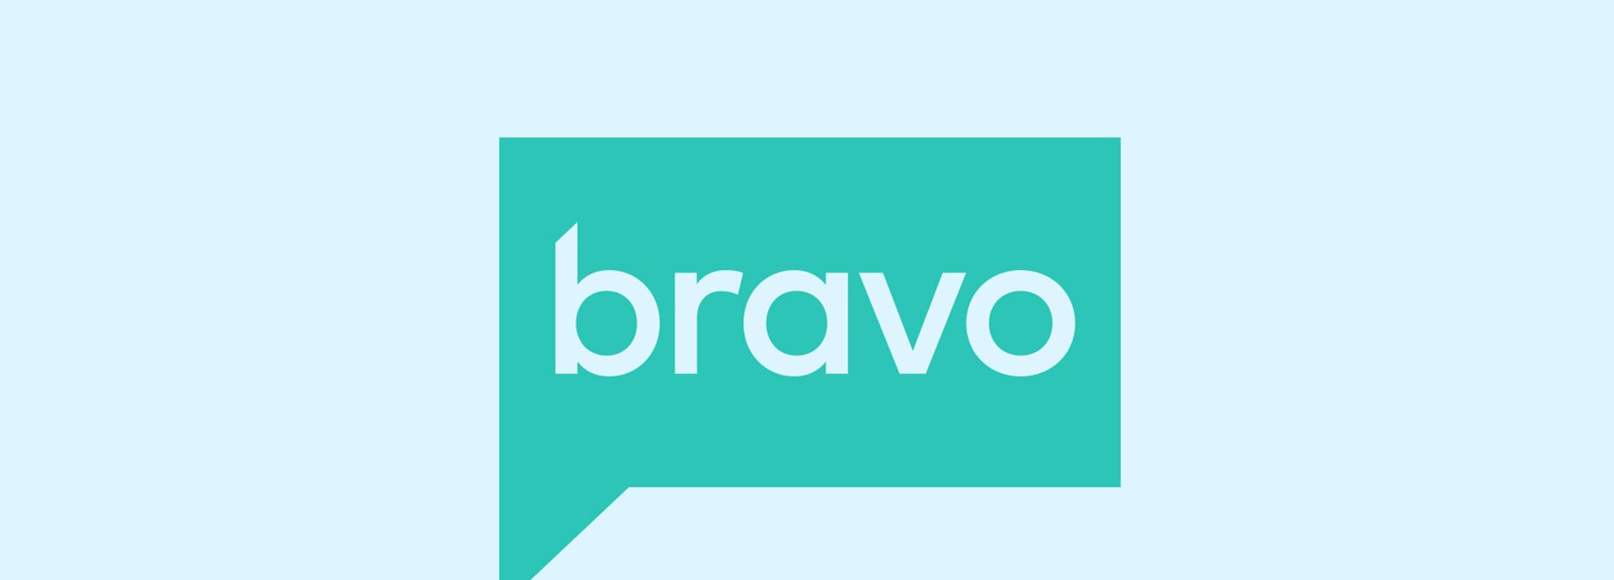 How to Activate Bravo TV Using Bravotv Activation Code